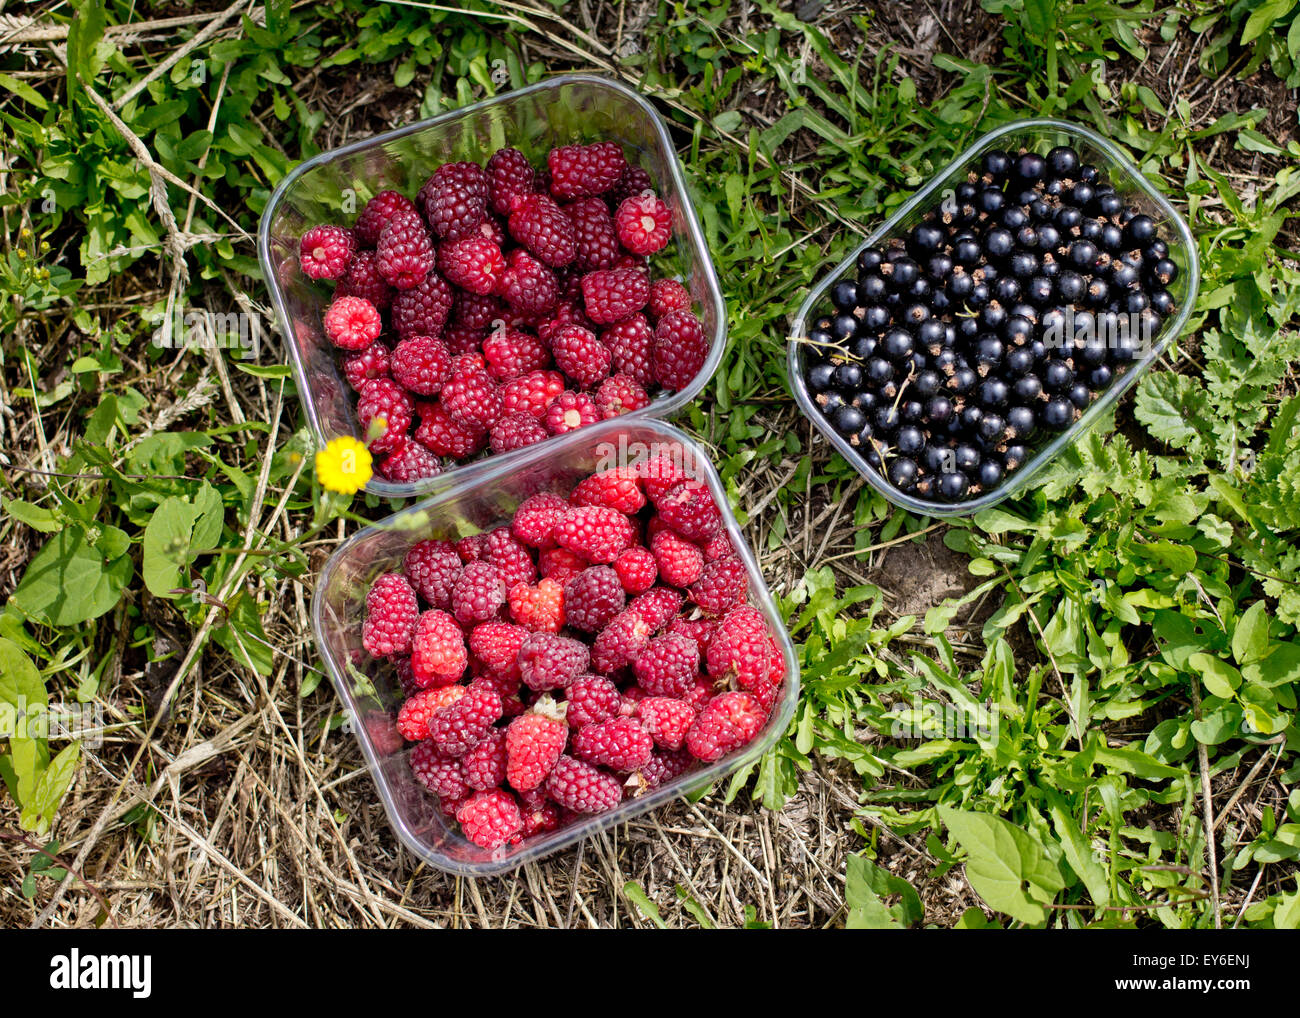 Pick Your Own, Fruit Farm, UK, © Clarissa Debenham / Alamy Stock Photo